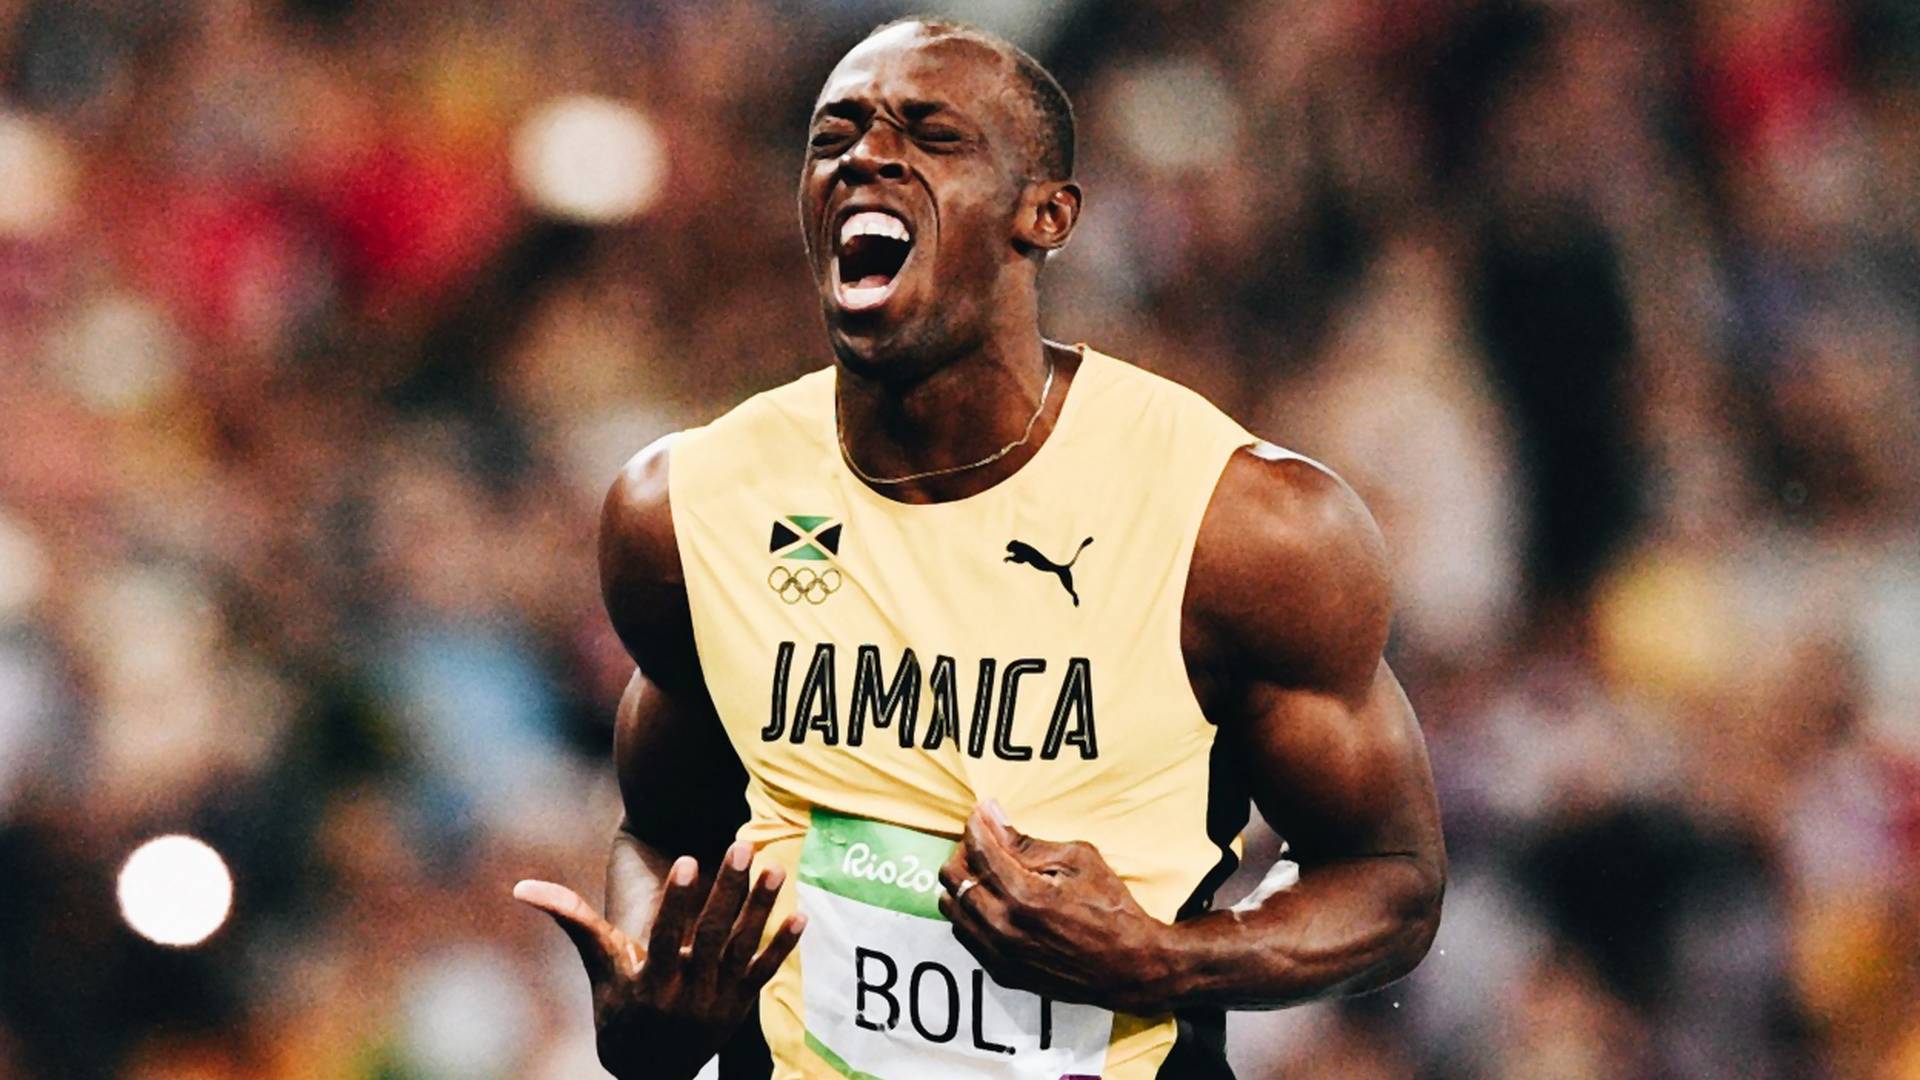 Jusein Bolt mora da vrati olimpijsko zlato zbog dopinga kolege